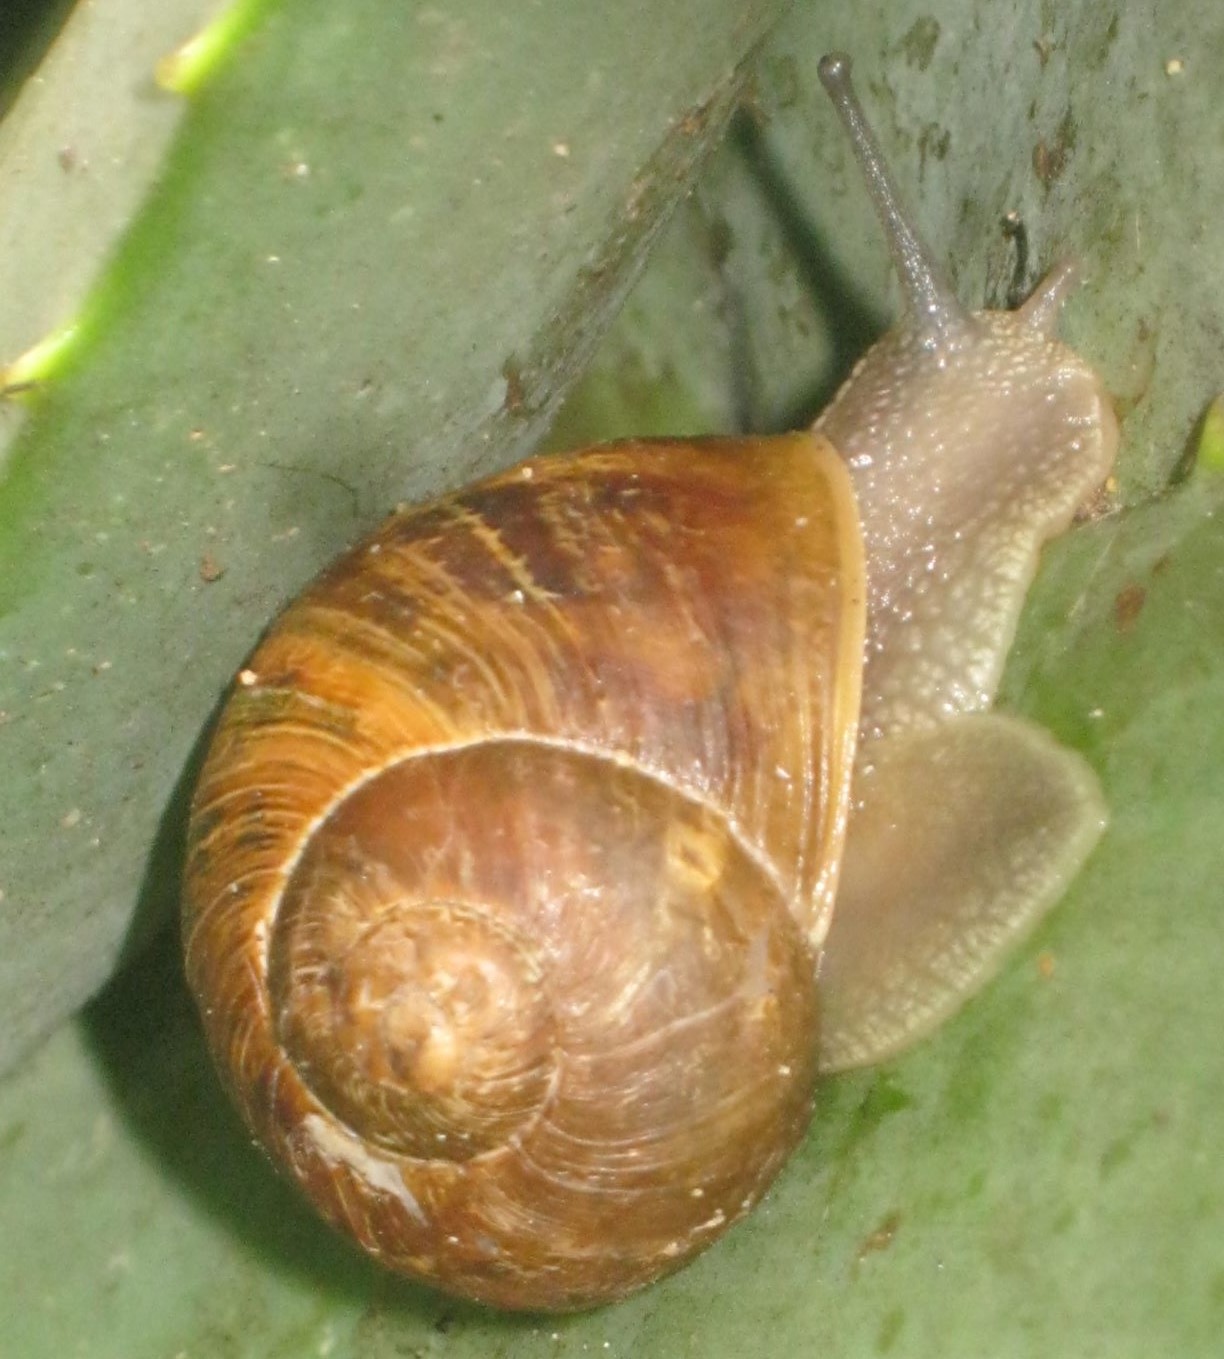 The garden snail that destroys some garden plants: Helix aspersa